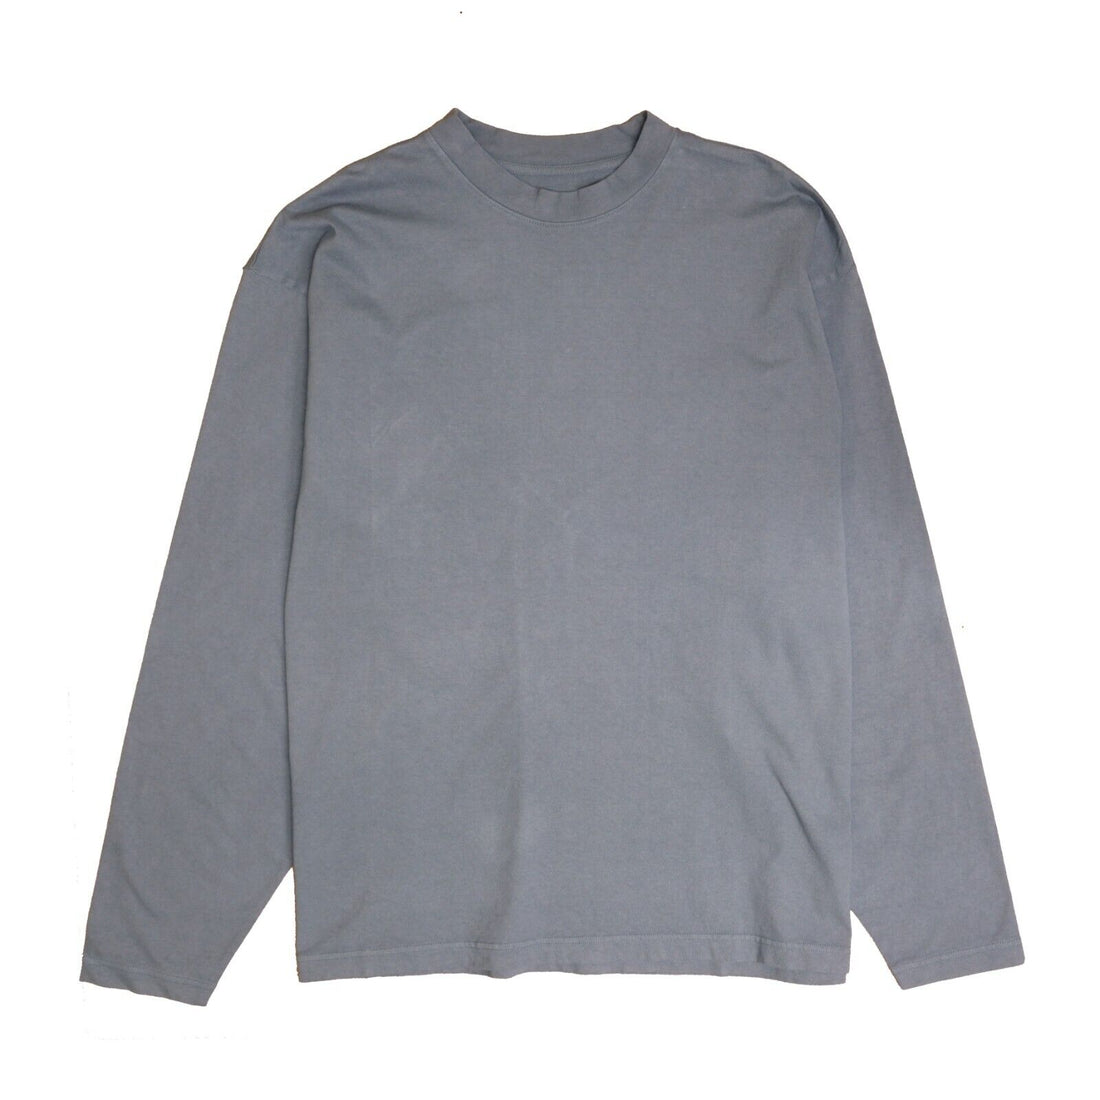 Yeezy Gap Unreleased Long Sleeve T-Shirt Size 2XL Dark Gray